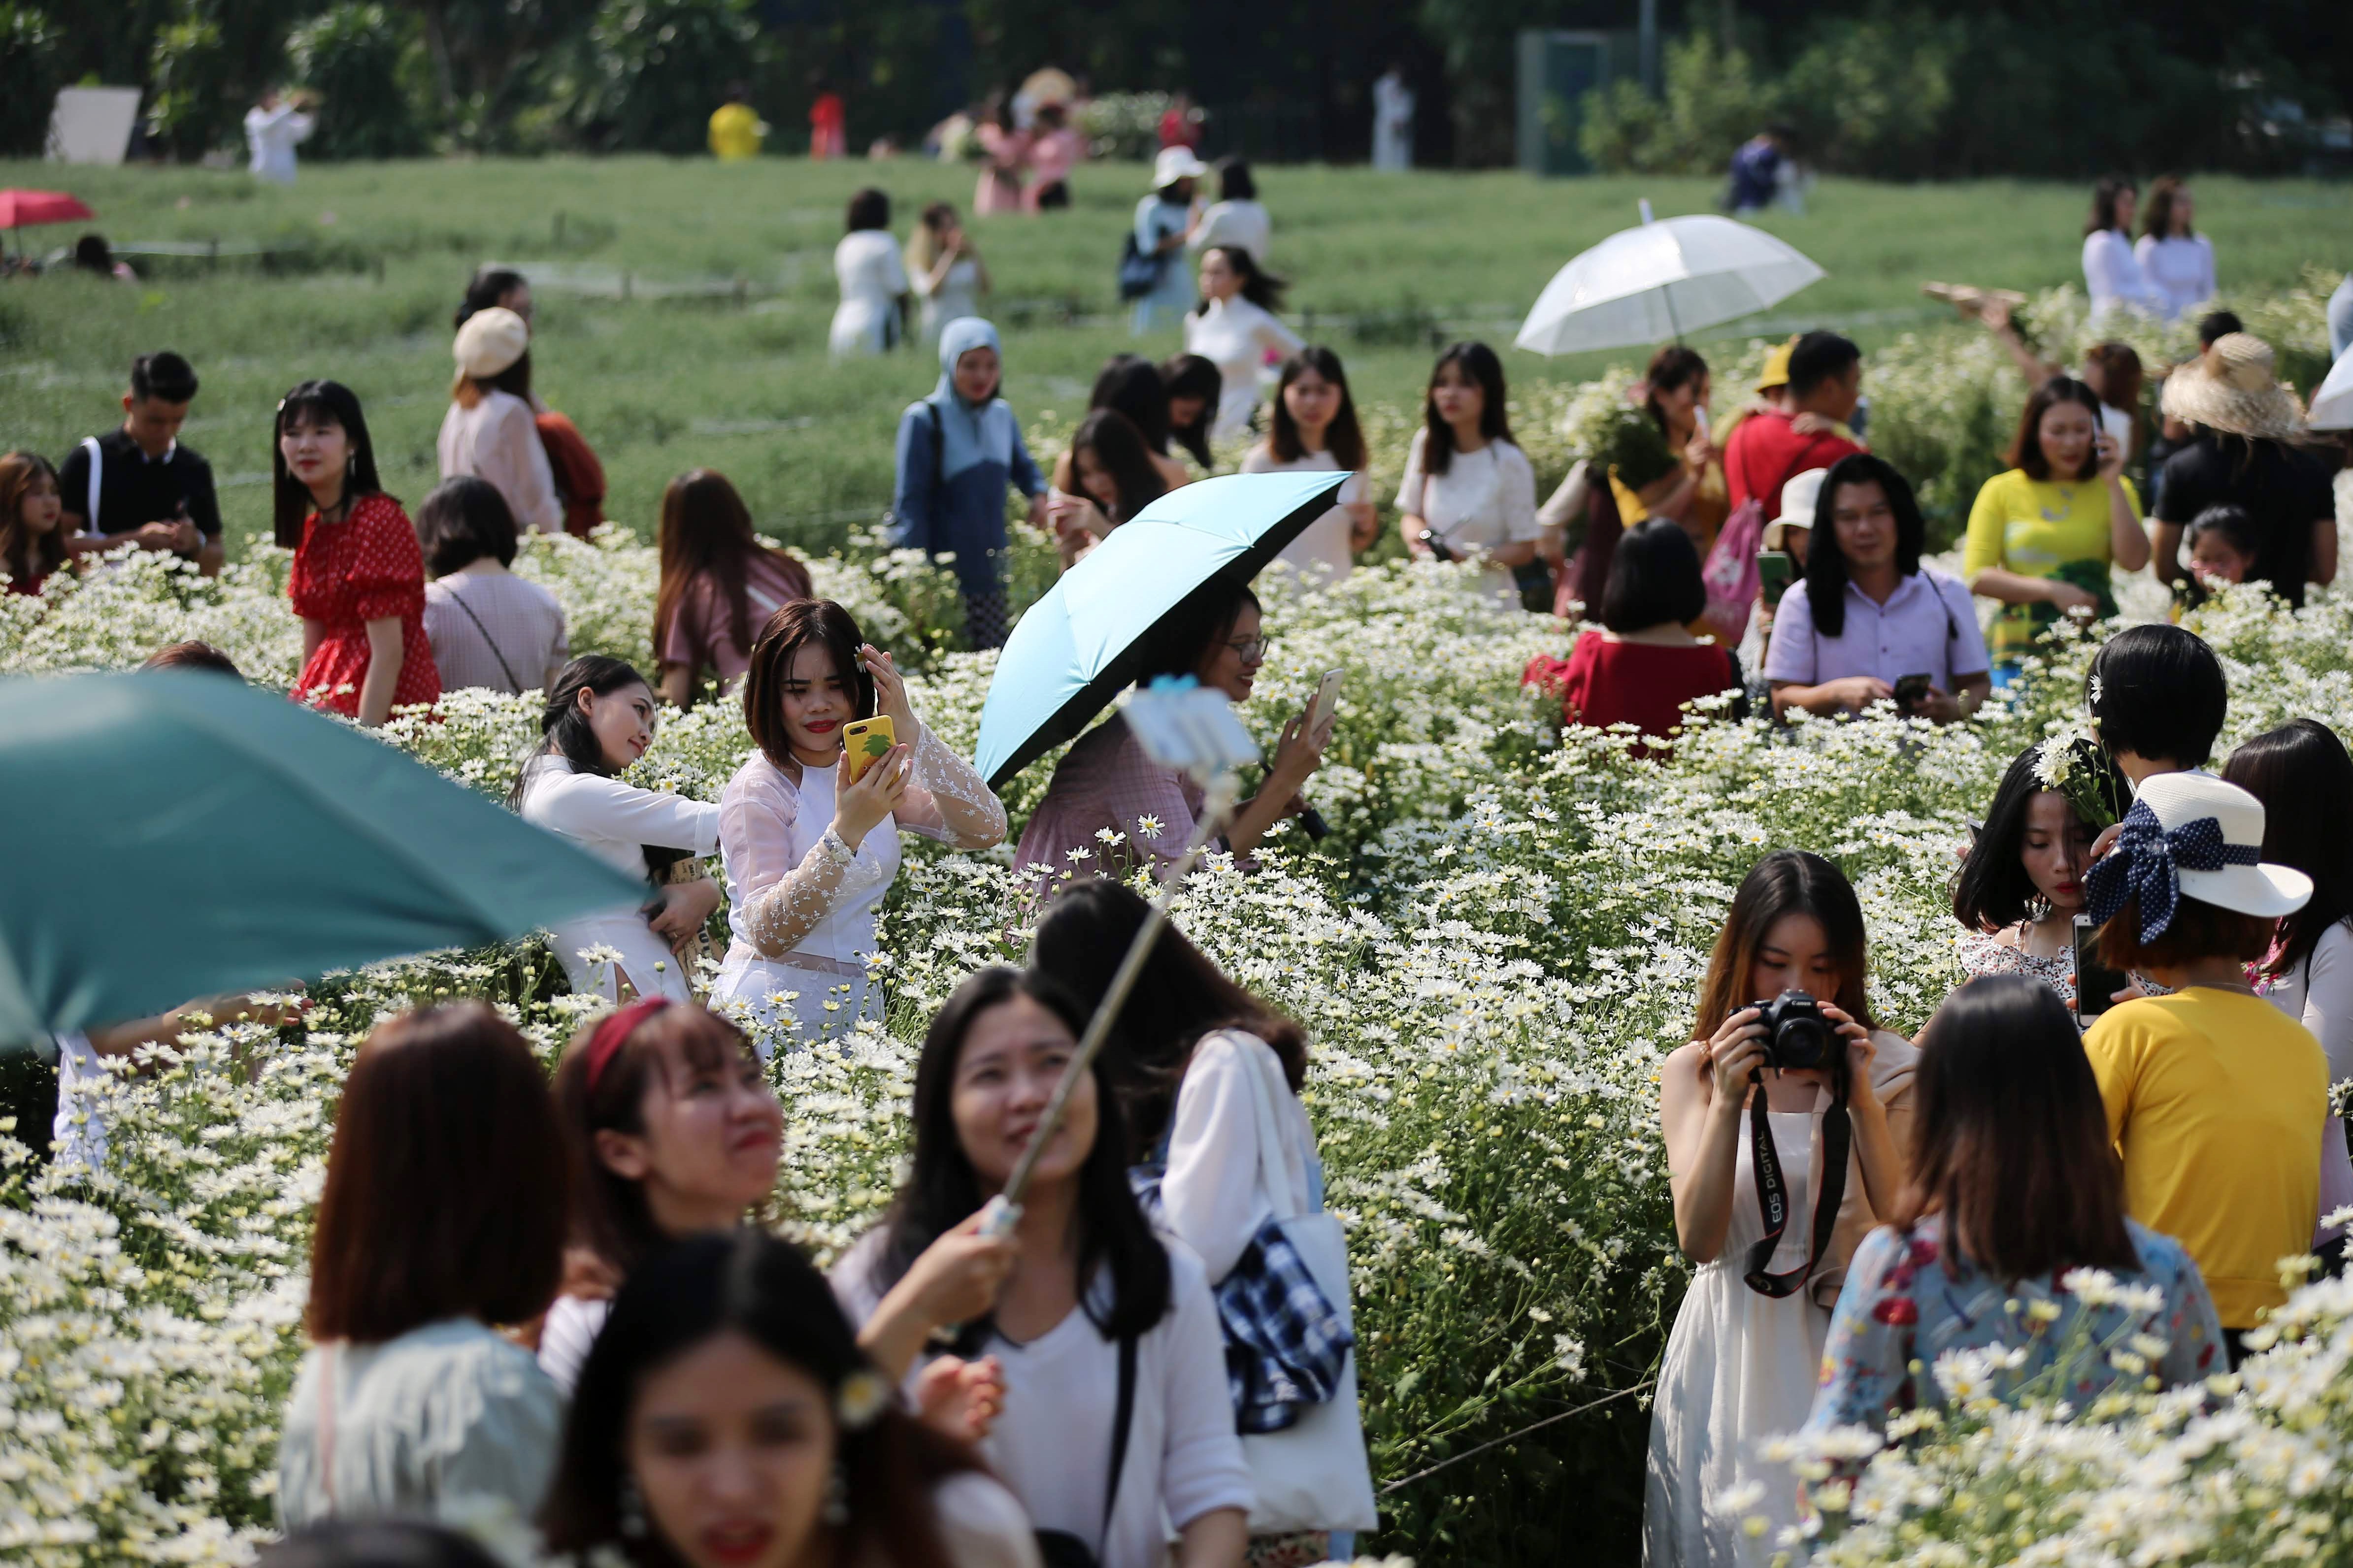 Hanoi daisy gardens attract visitors